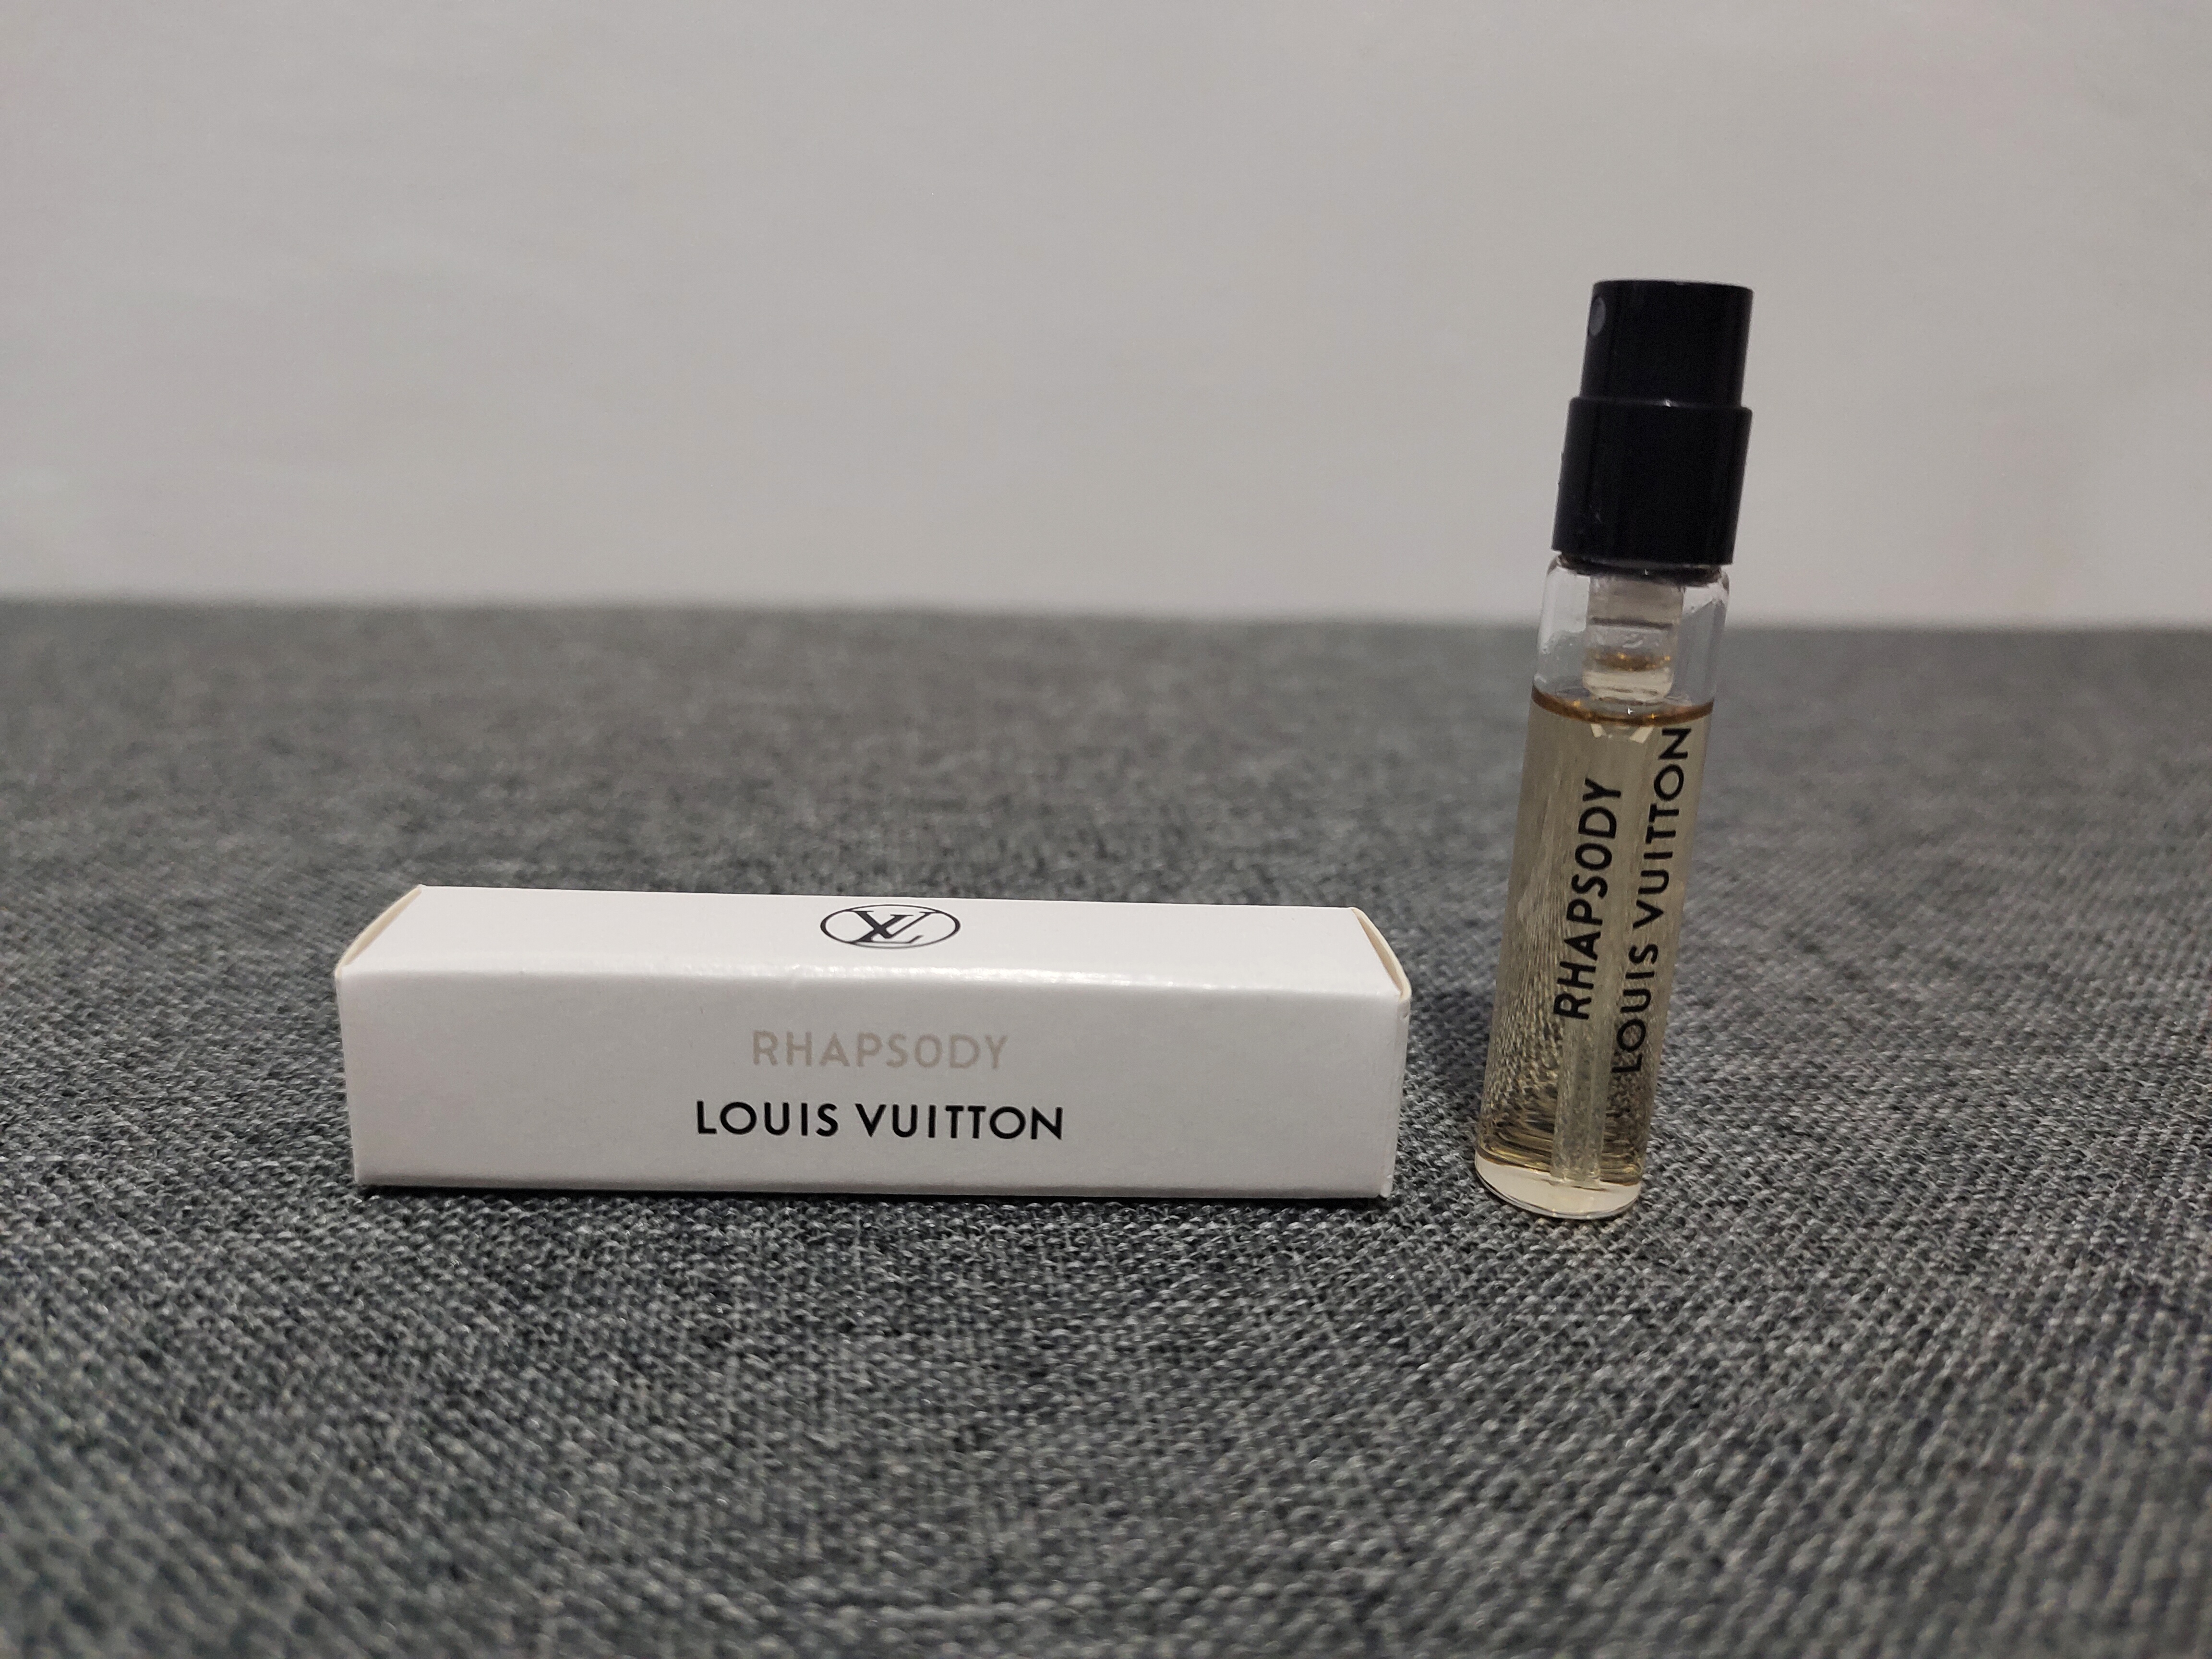 Louis Vuitton (LV Perfume) Rhapsody vial